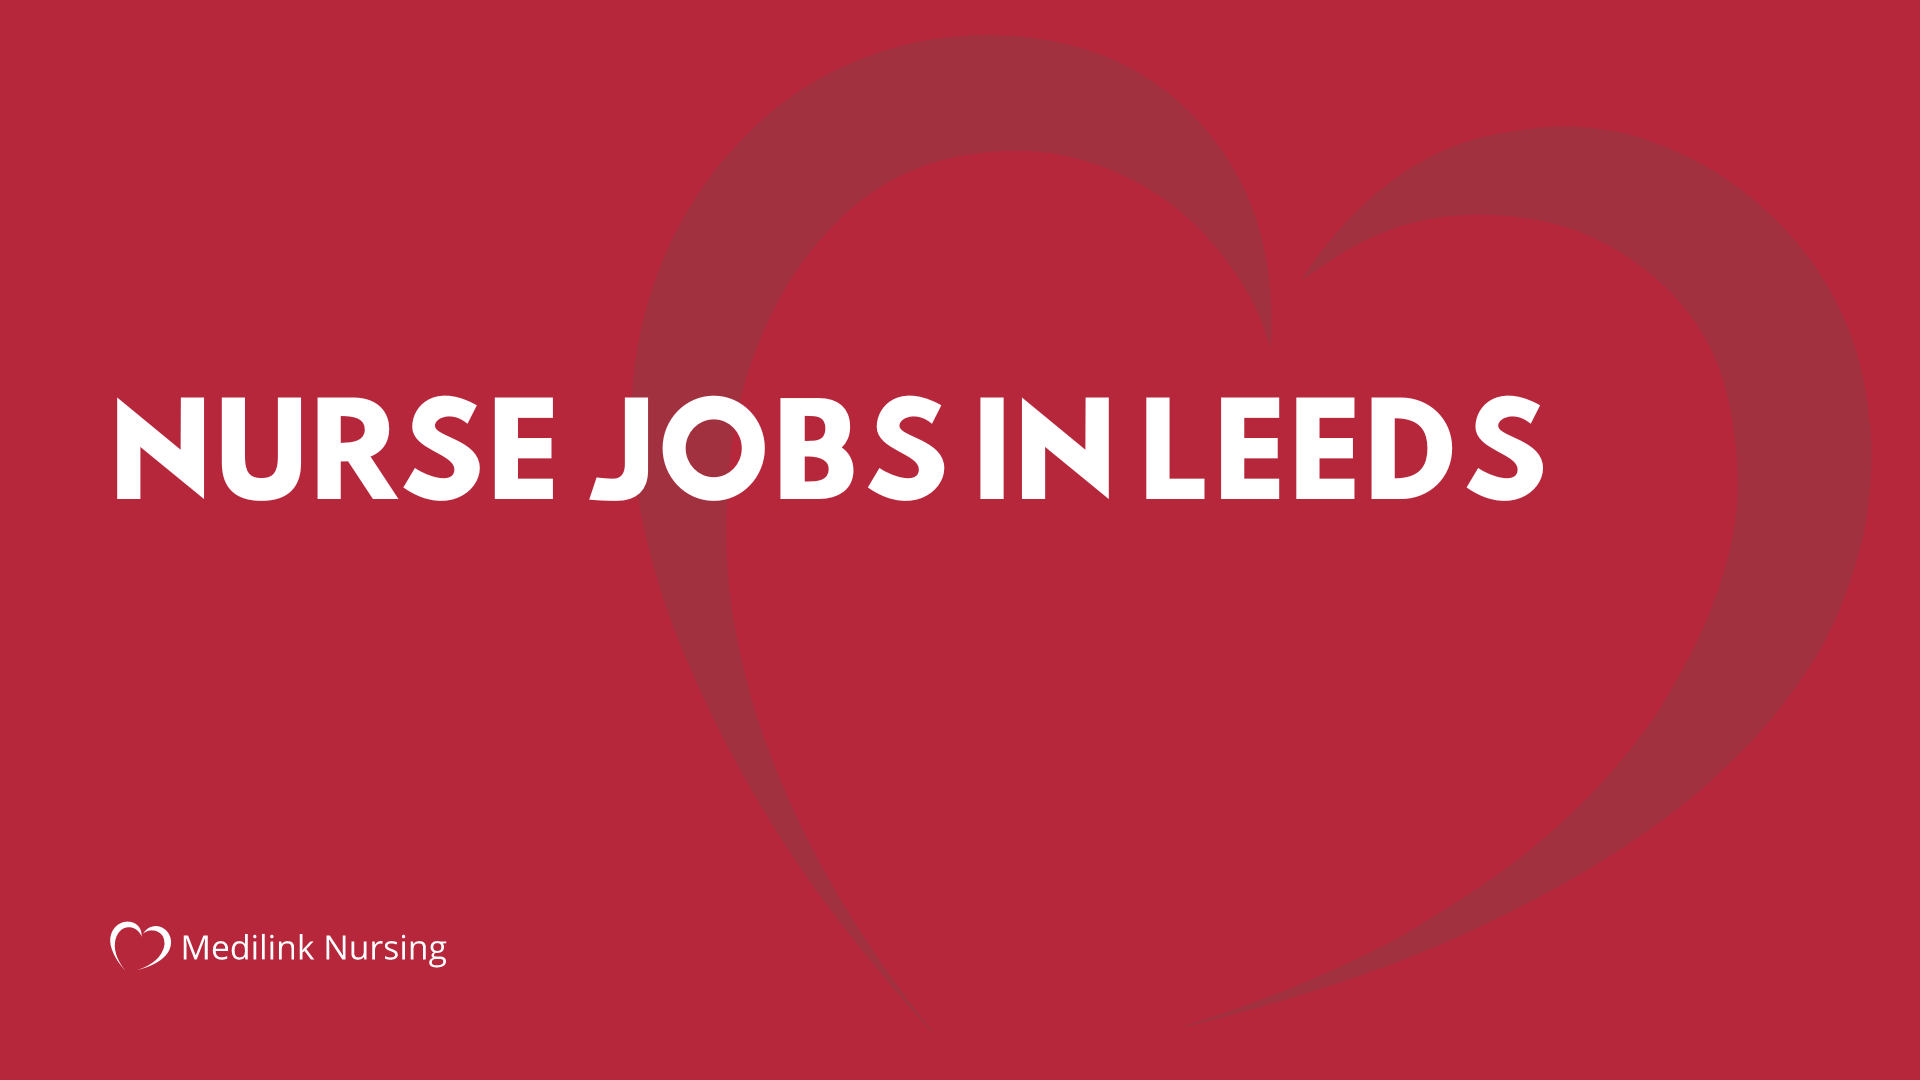 Nurse Jobs Leeds – Find Your Ideal Role With Medilink Nursing